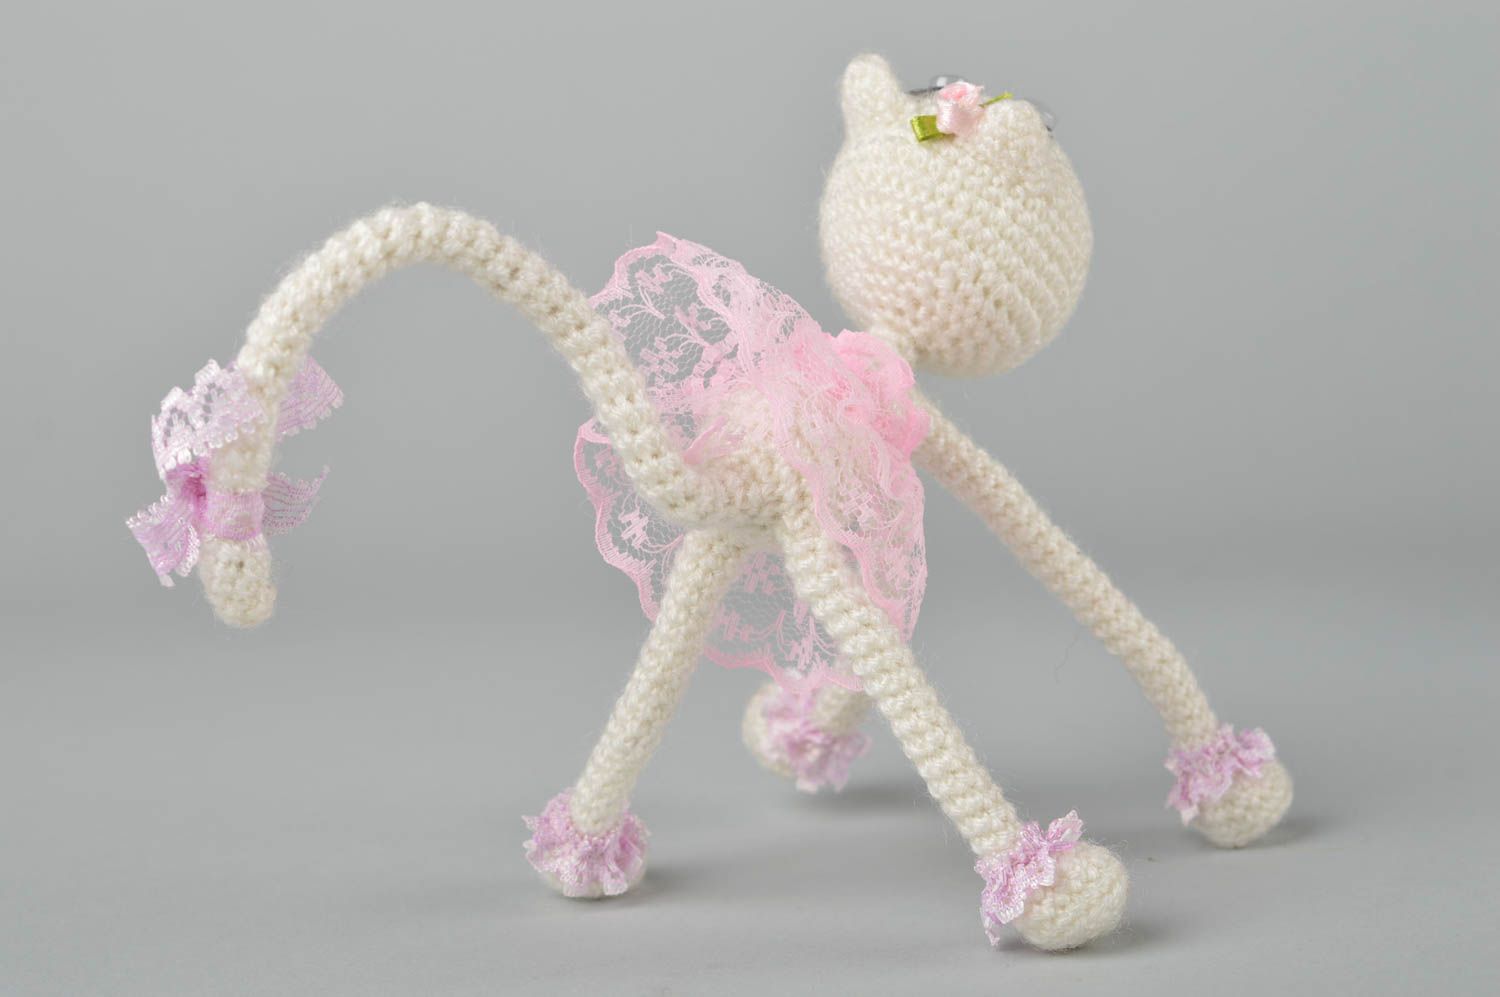 Hand-crocheted creative toy handmade designer toy for babies nursery decor photo 5